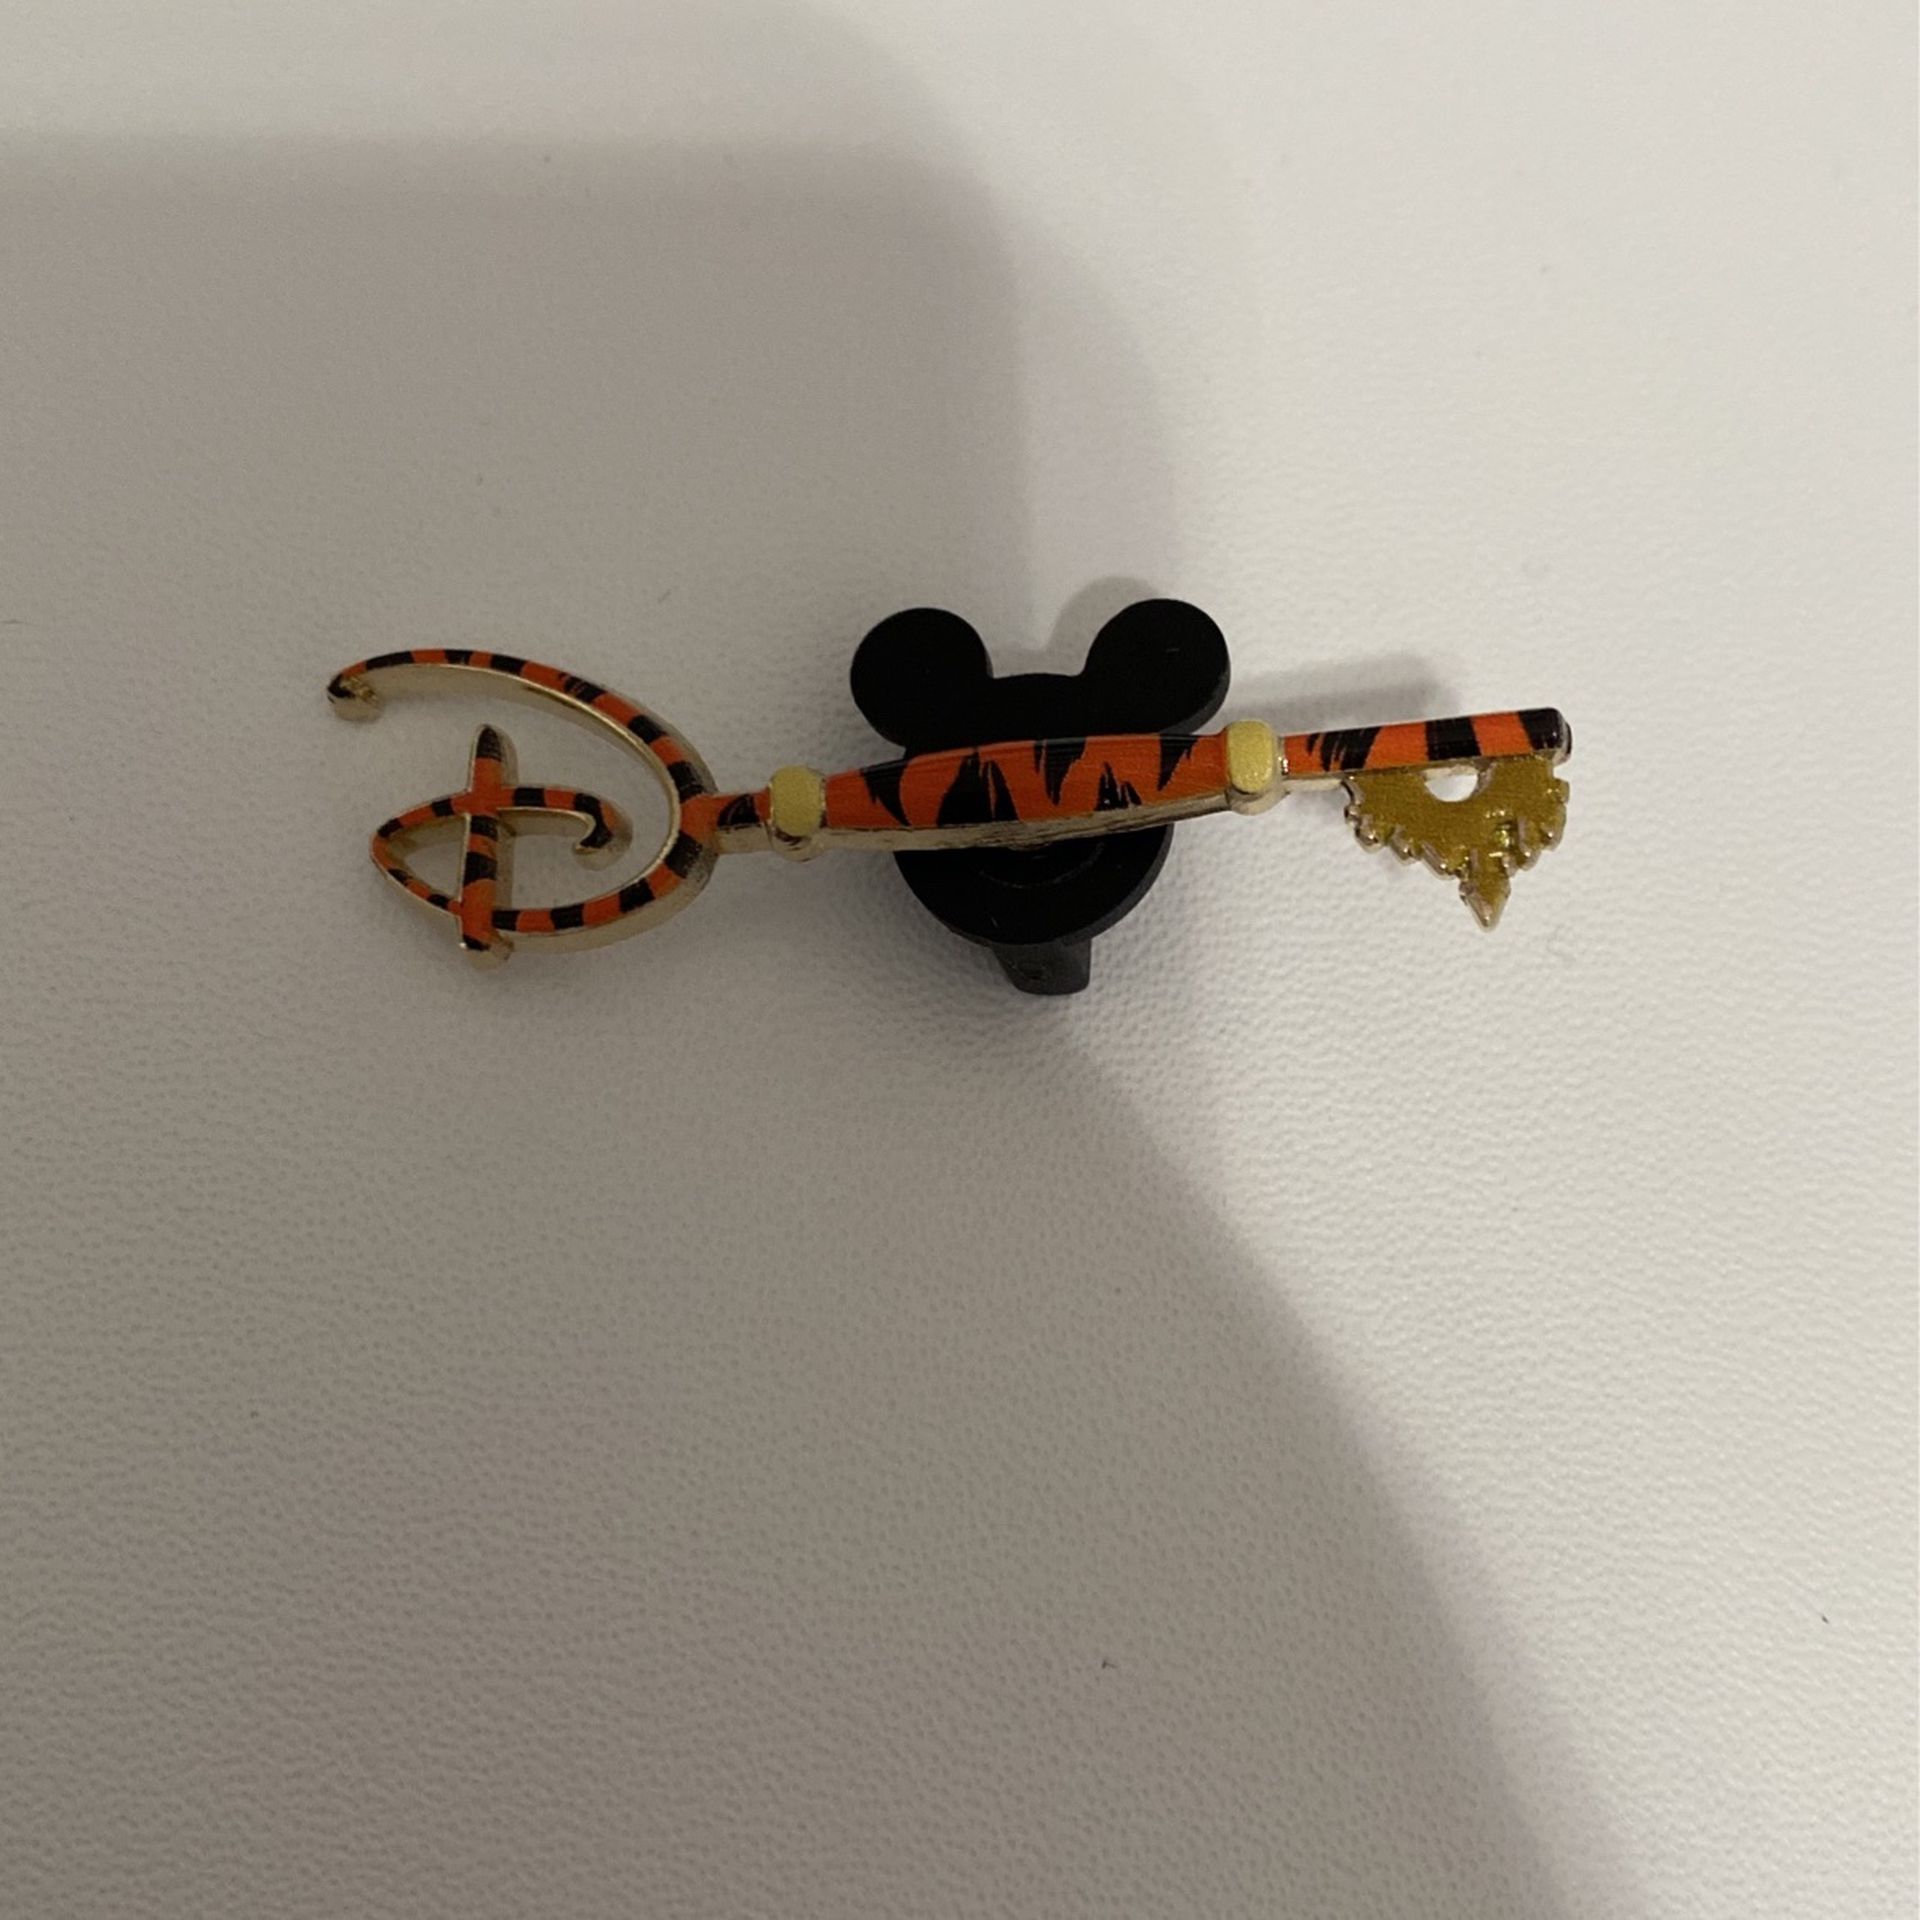 Disney store mystery Key Pin- Tigger